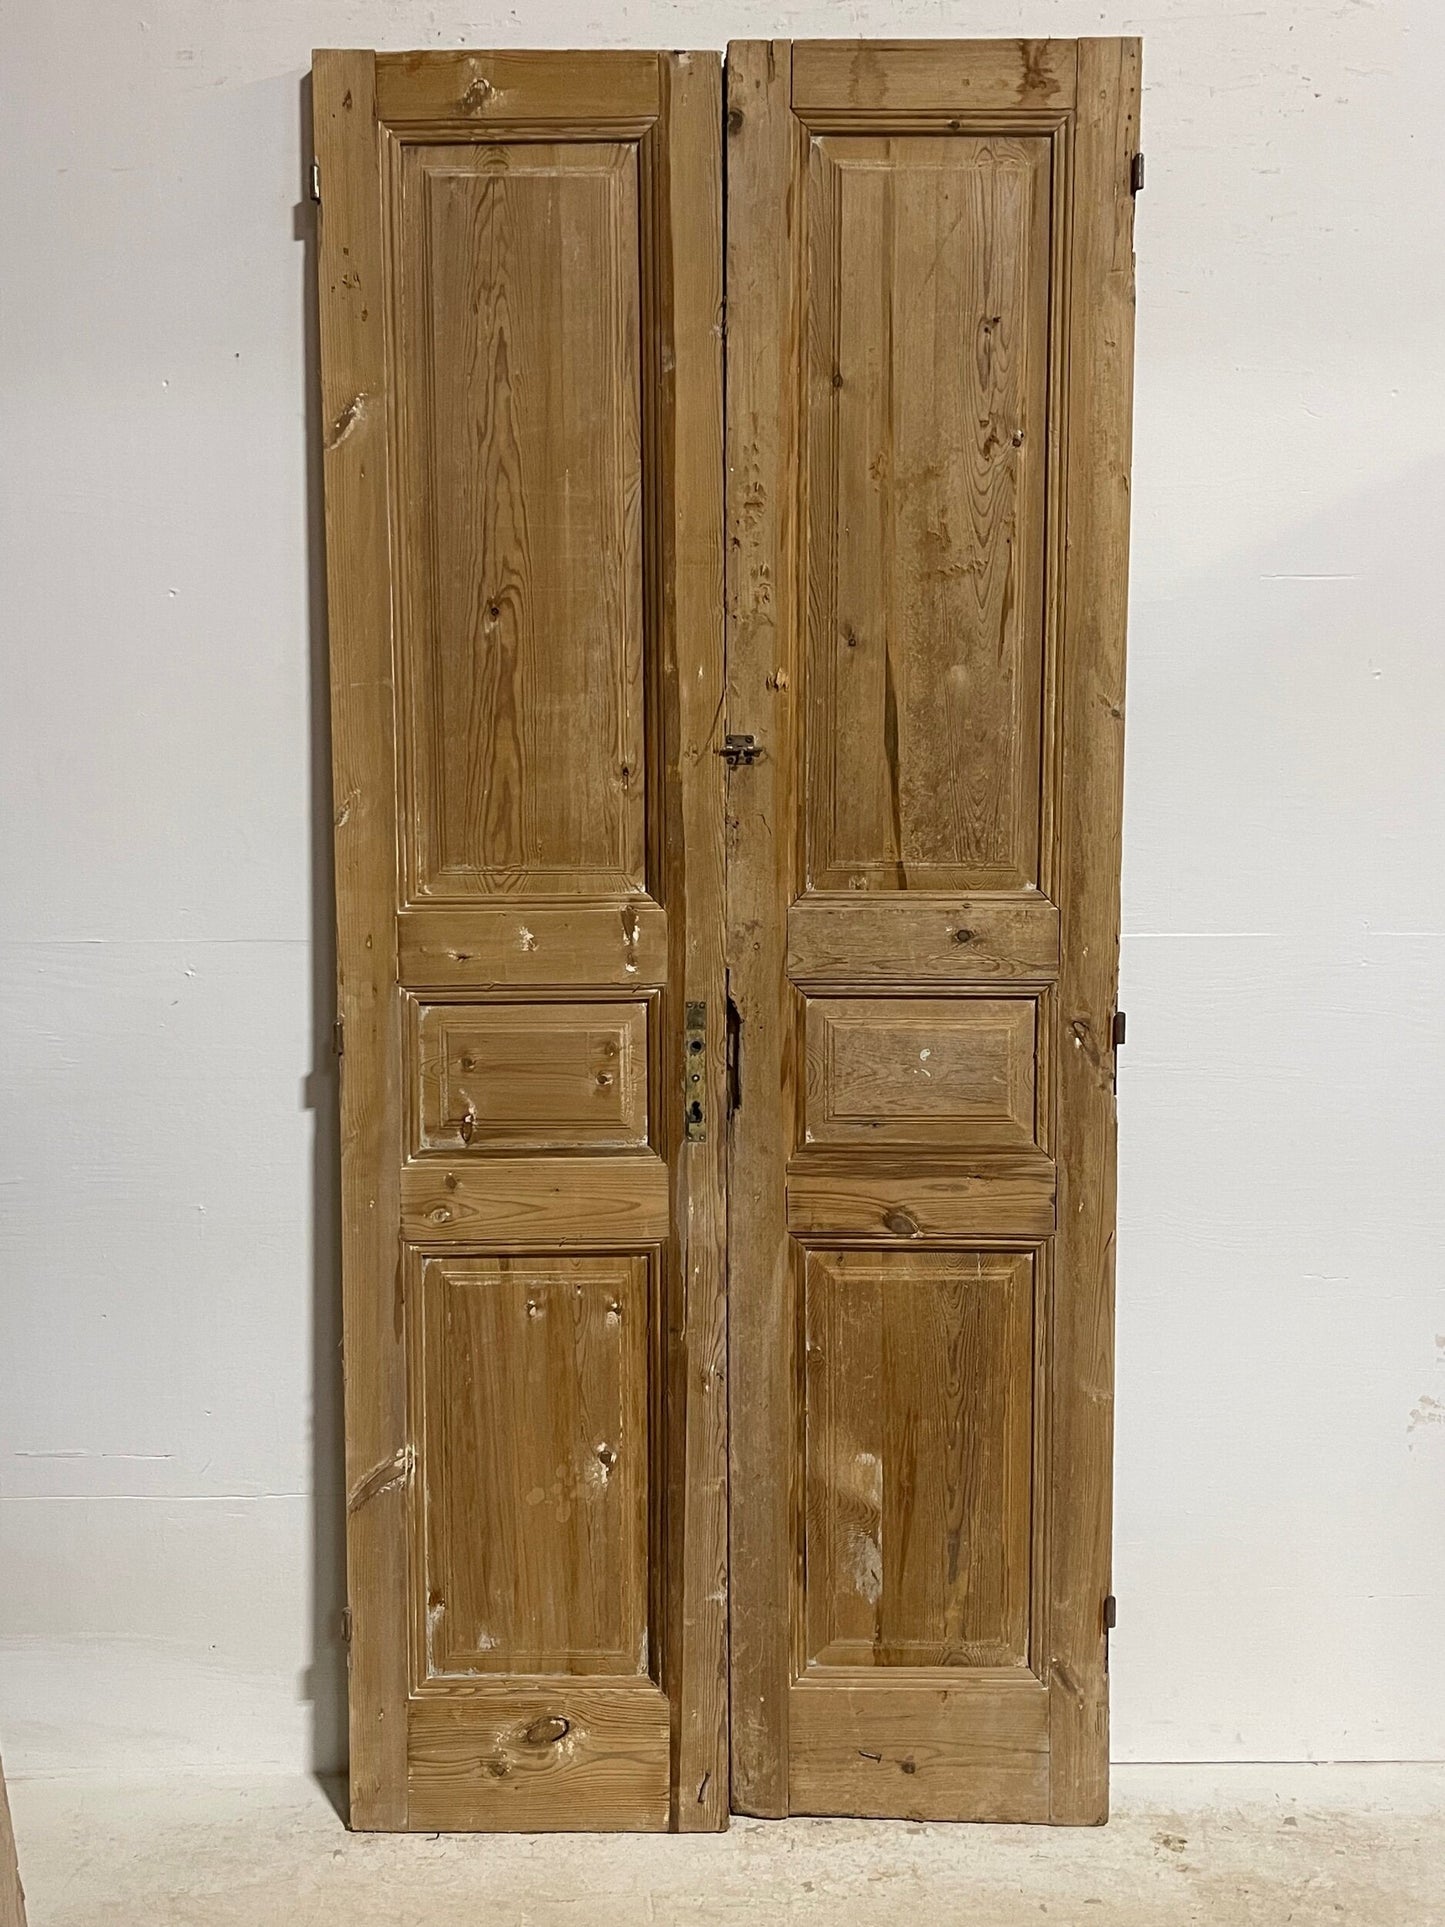 Antique French doors (93x41) H0074s